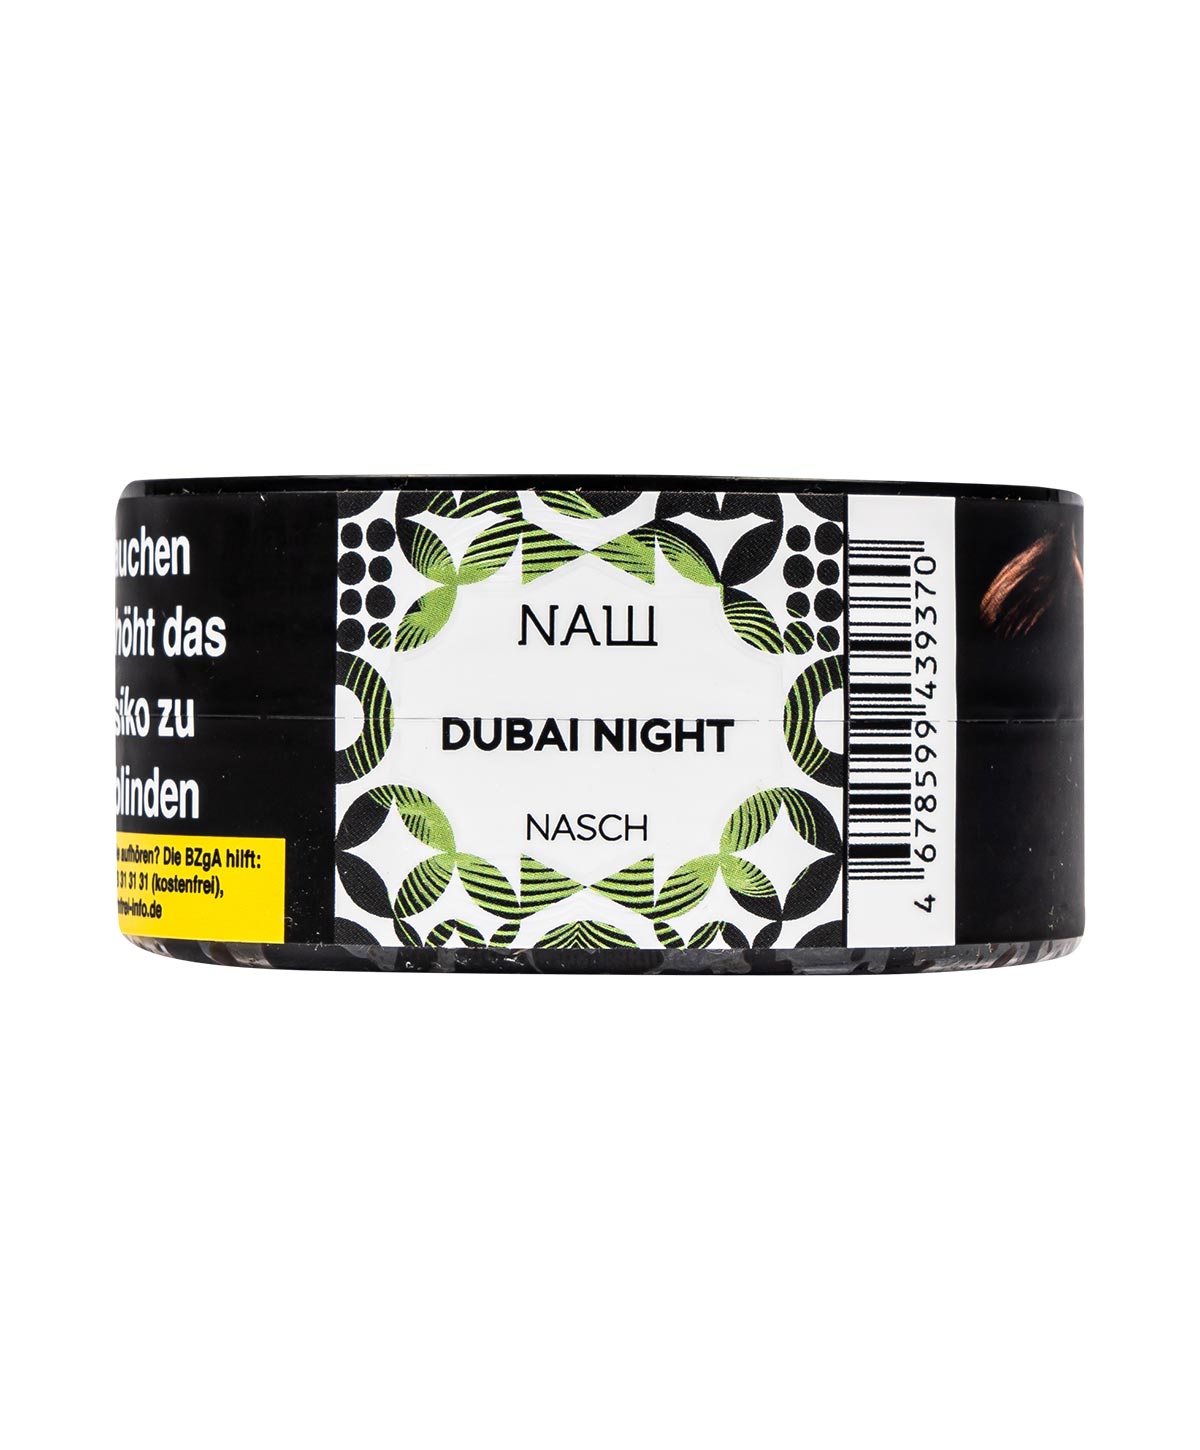 Nasch Dubai Night 25g